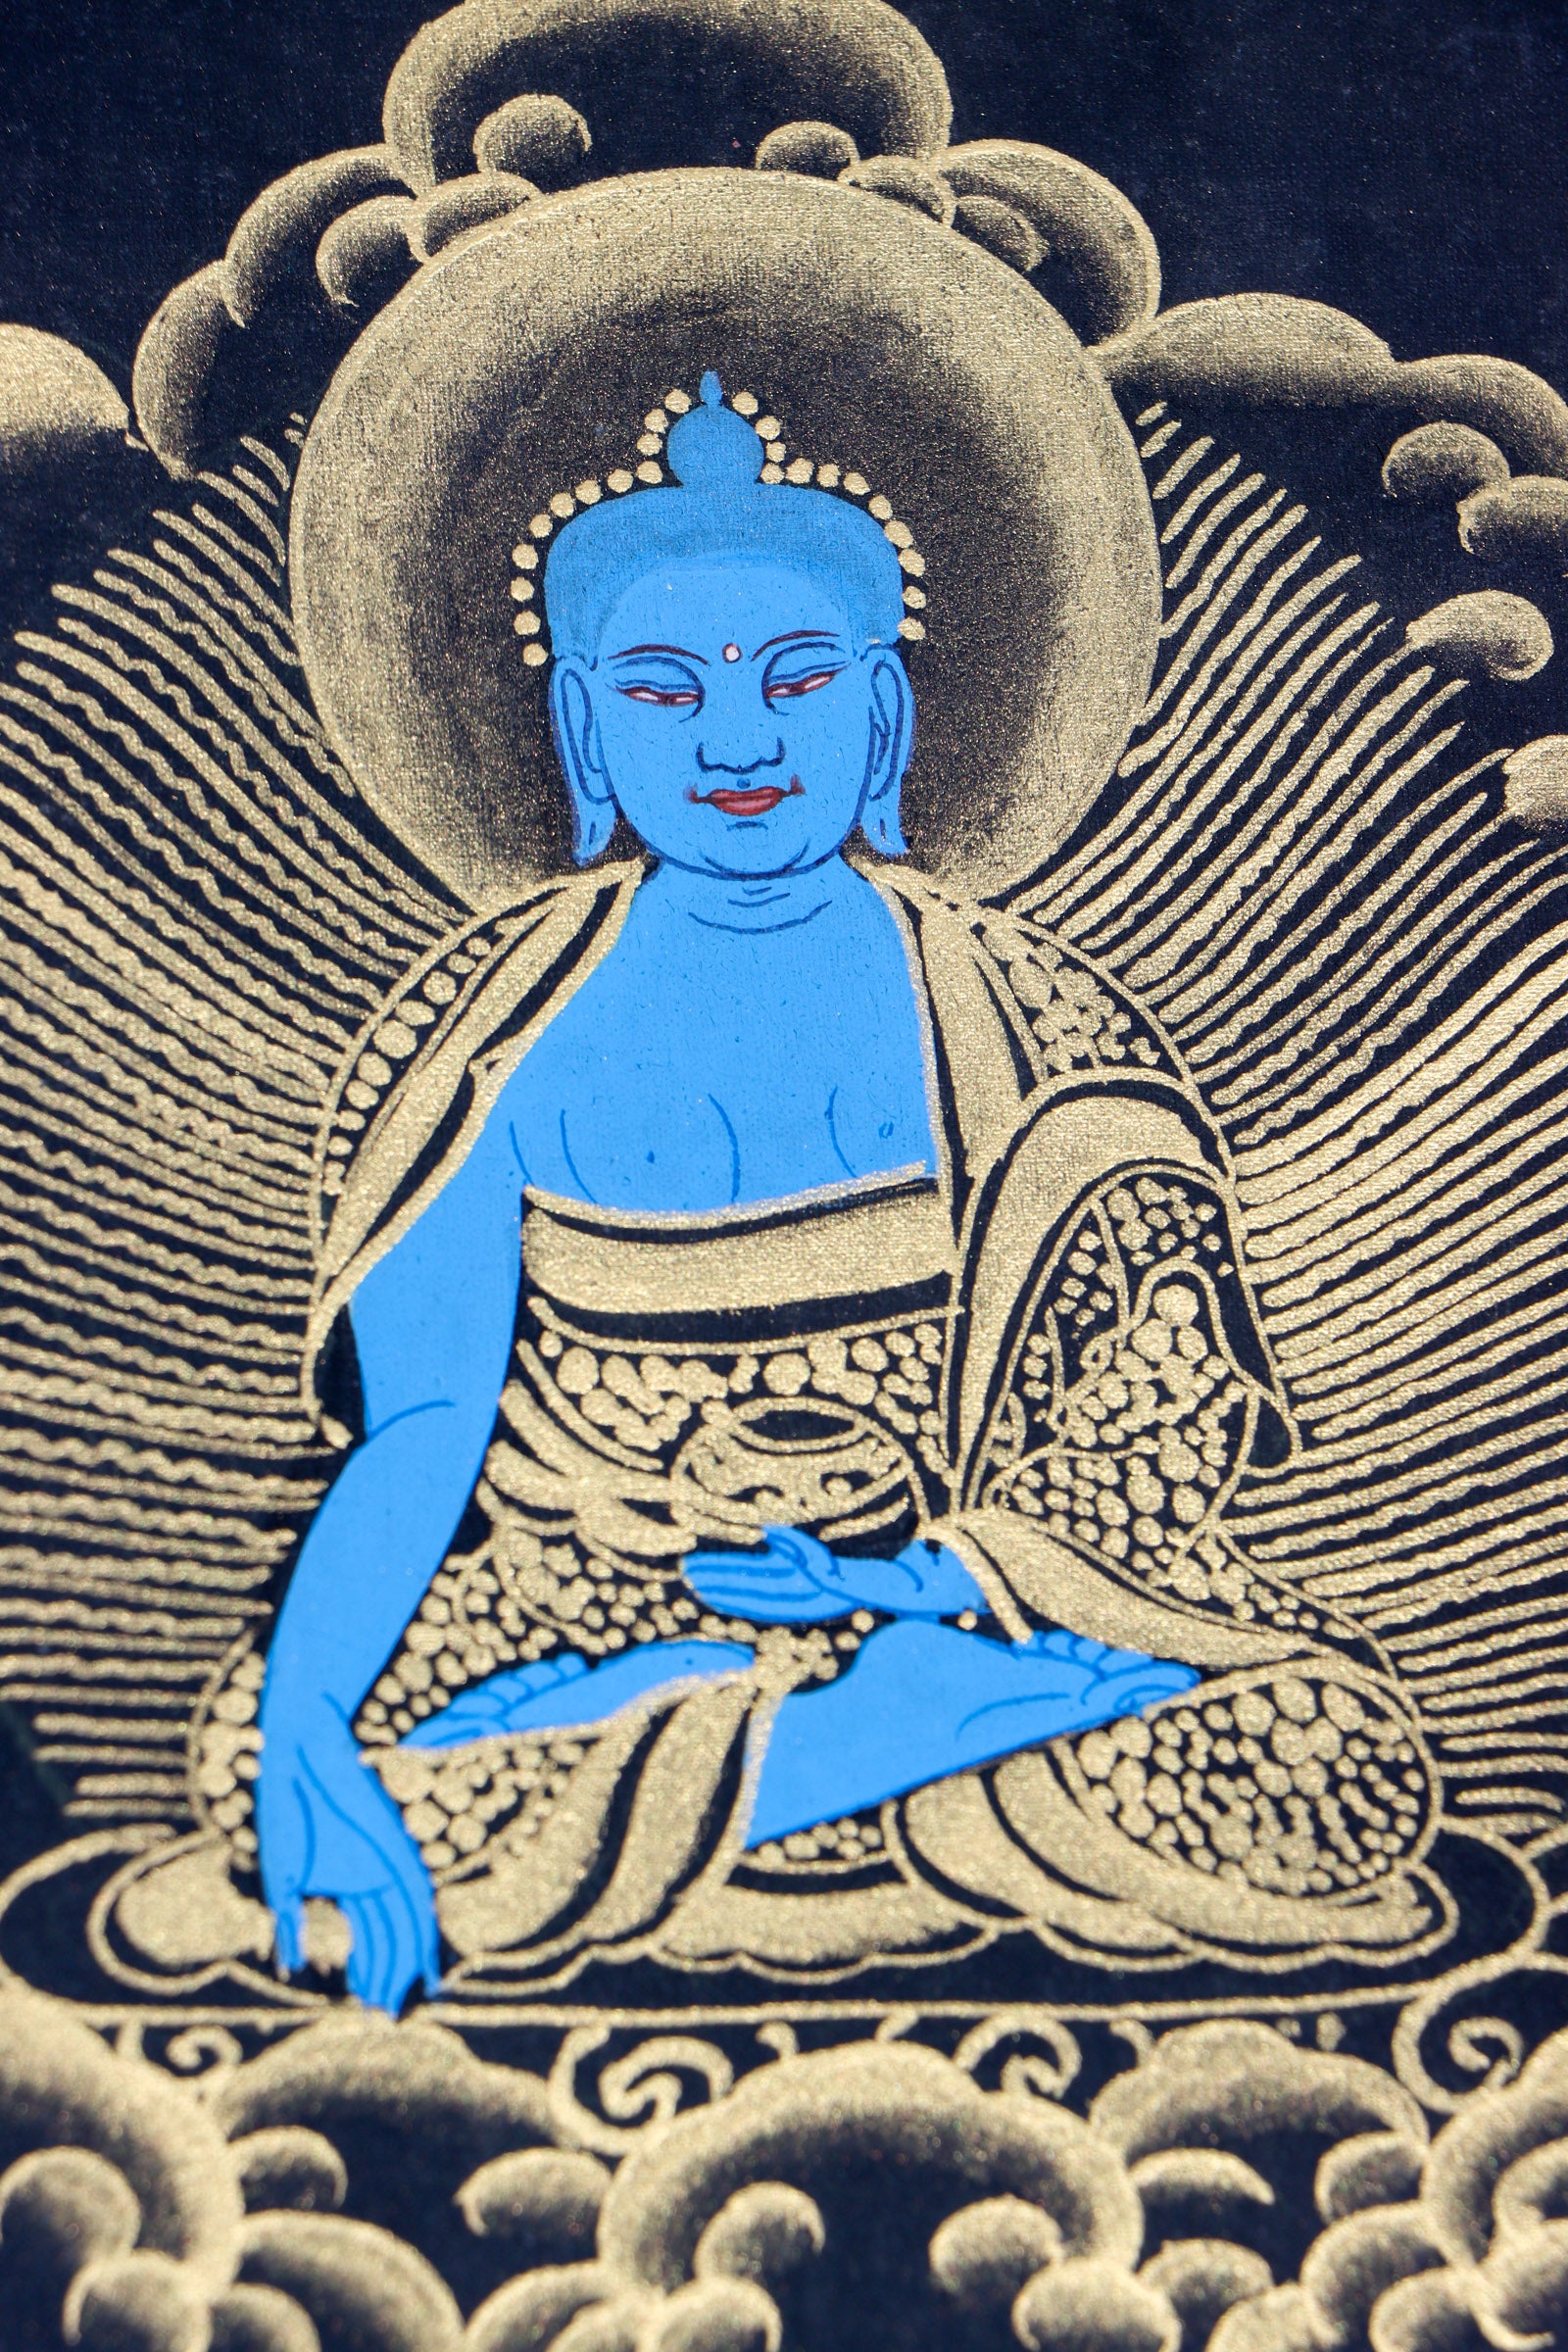 Shakyamuni Buddha Thangka Painting for meditation and reflective activities. 